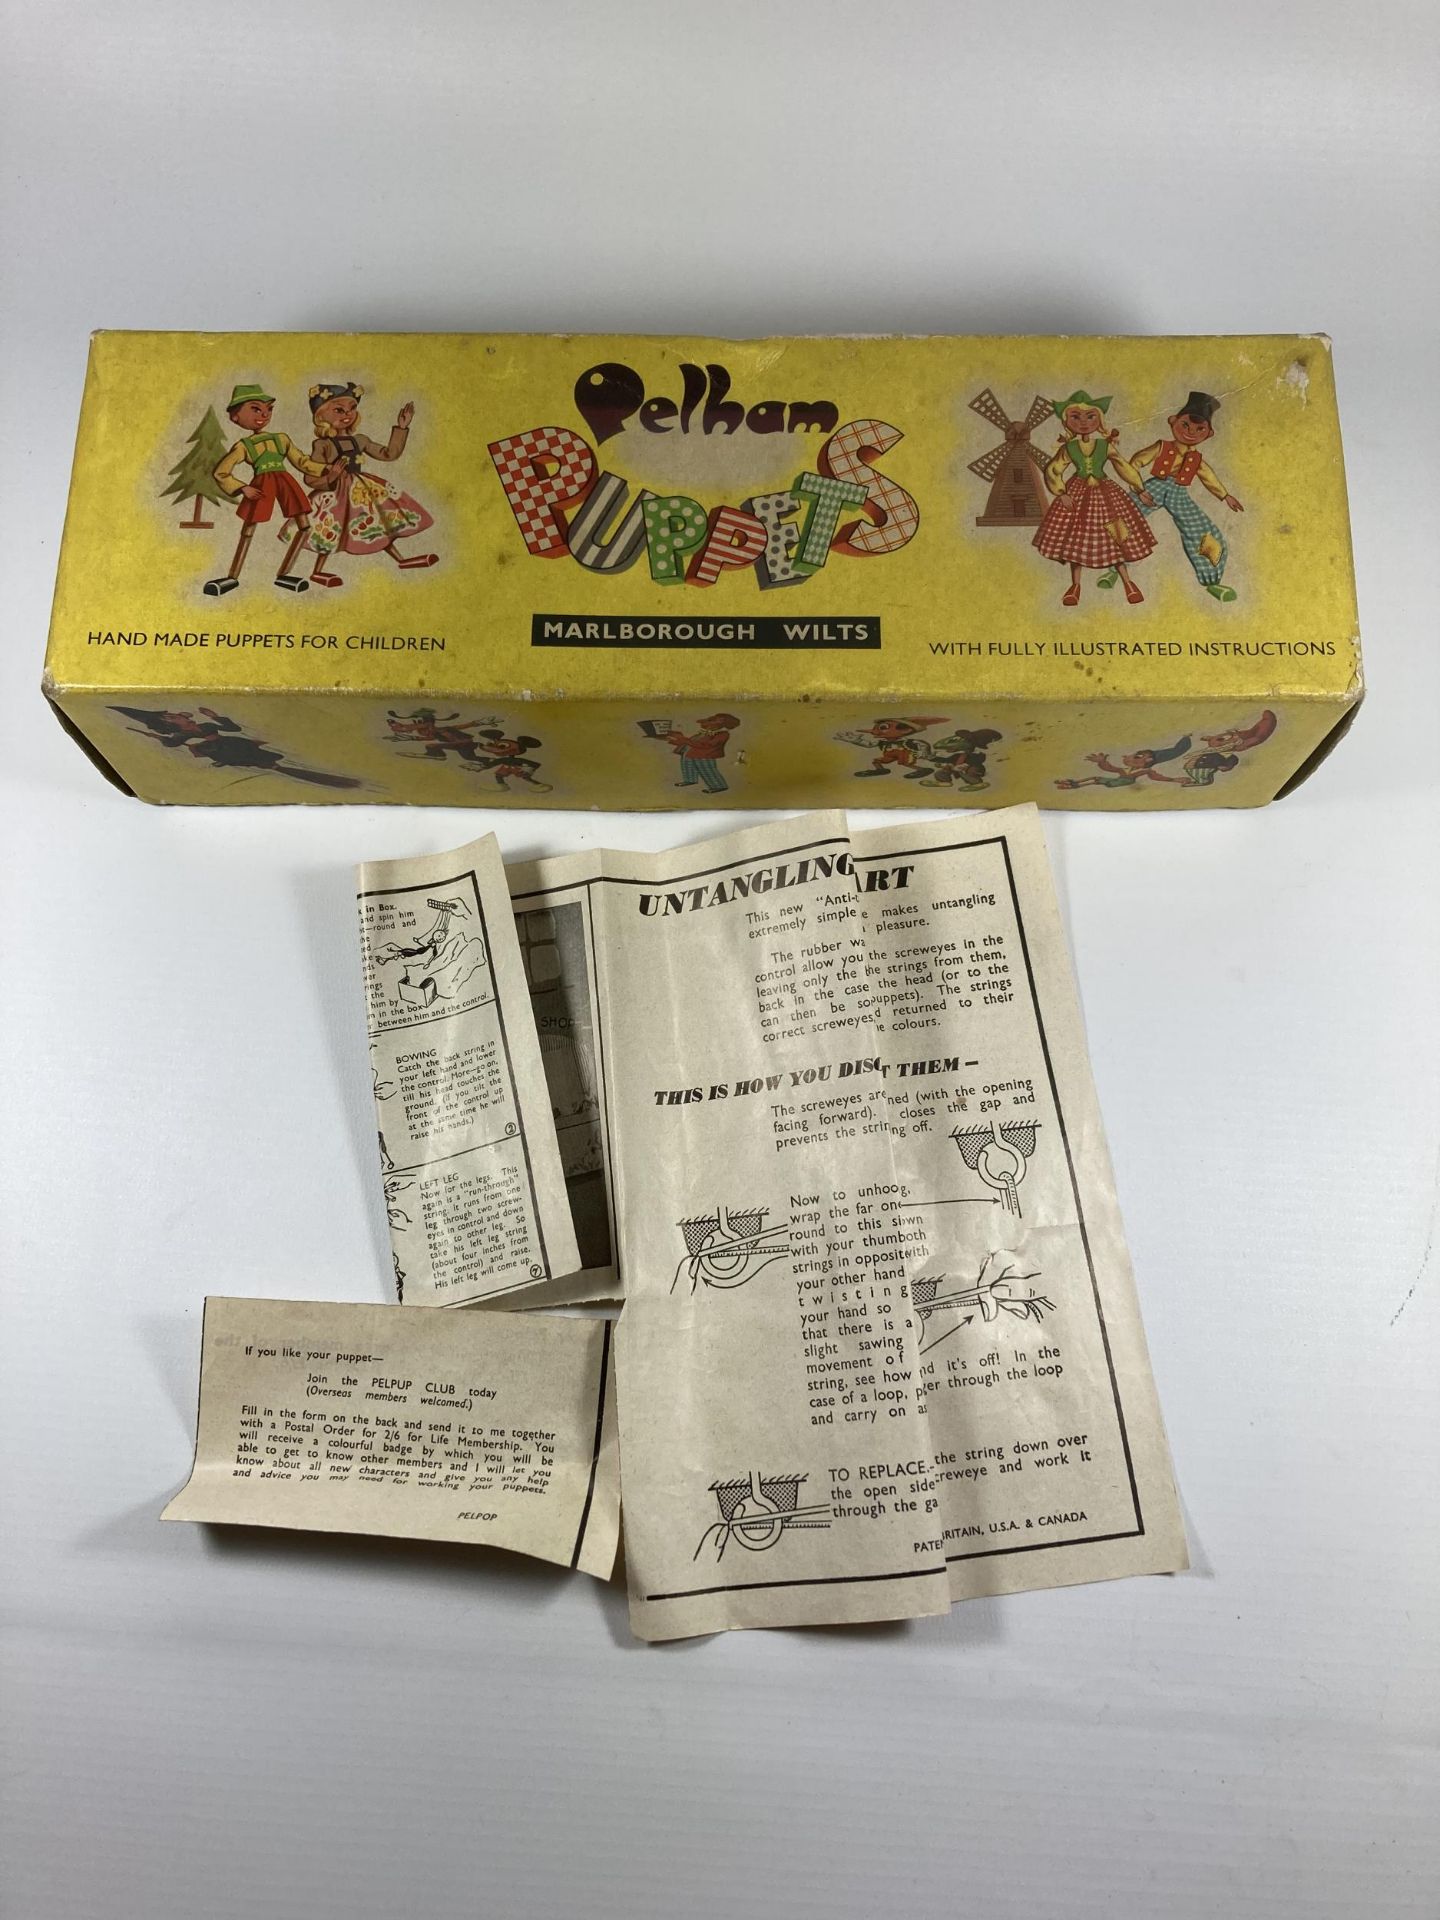 A VINTAGE PELHAM PUPPET - SAILOR IN ORIGINAL BOX - Image 3 of 3